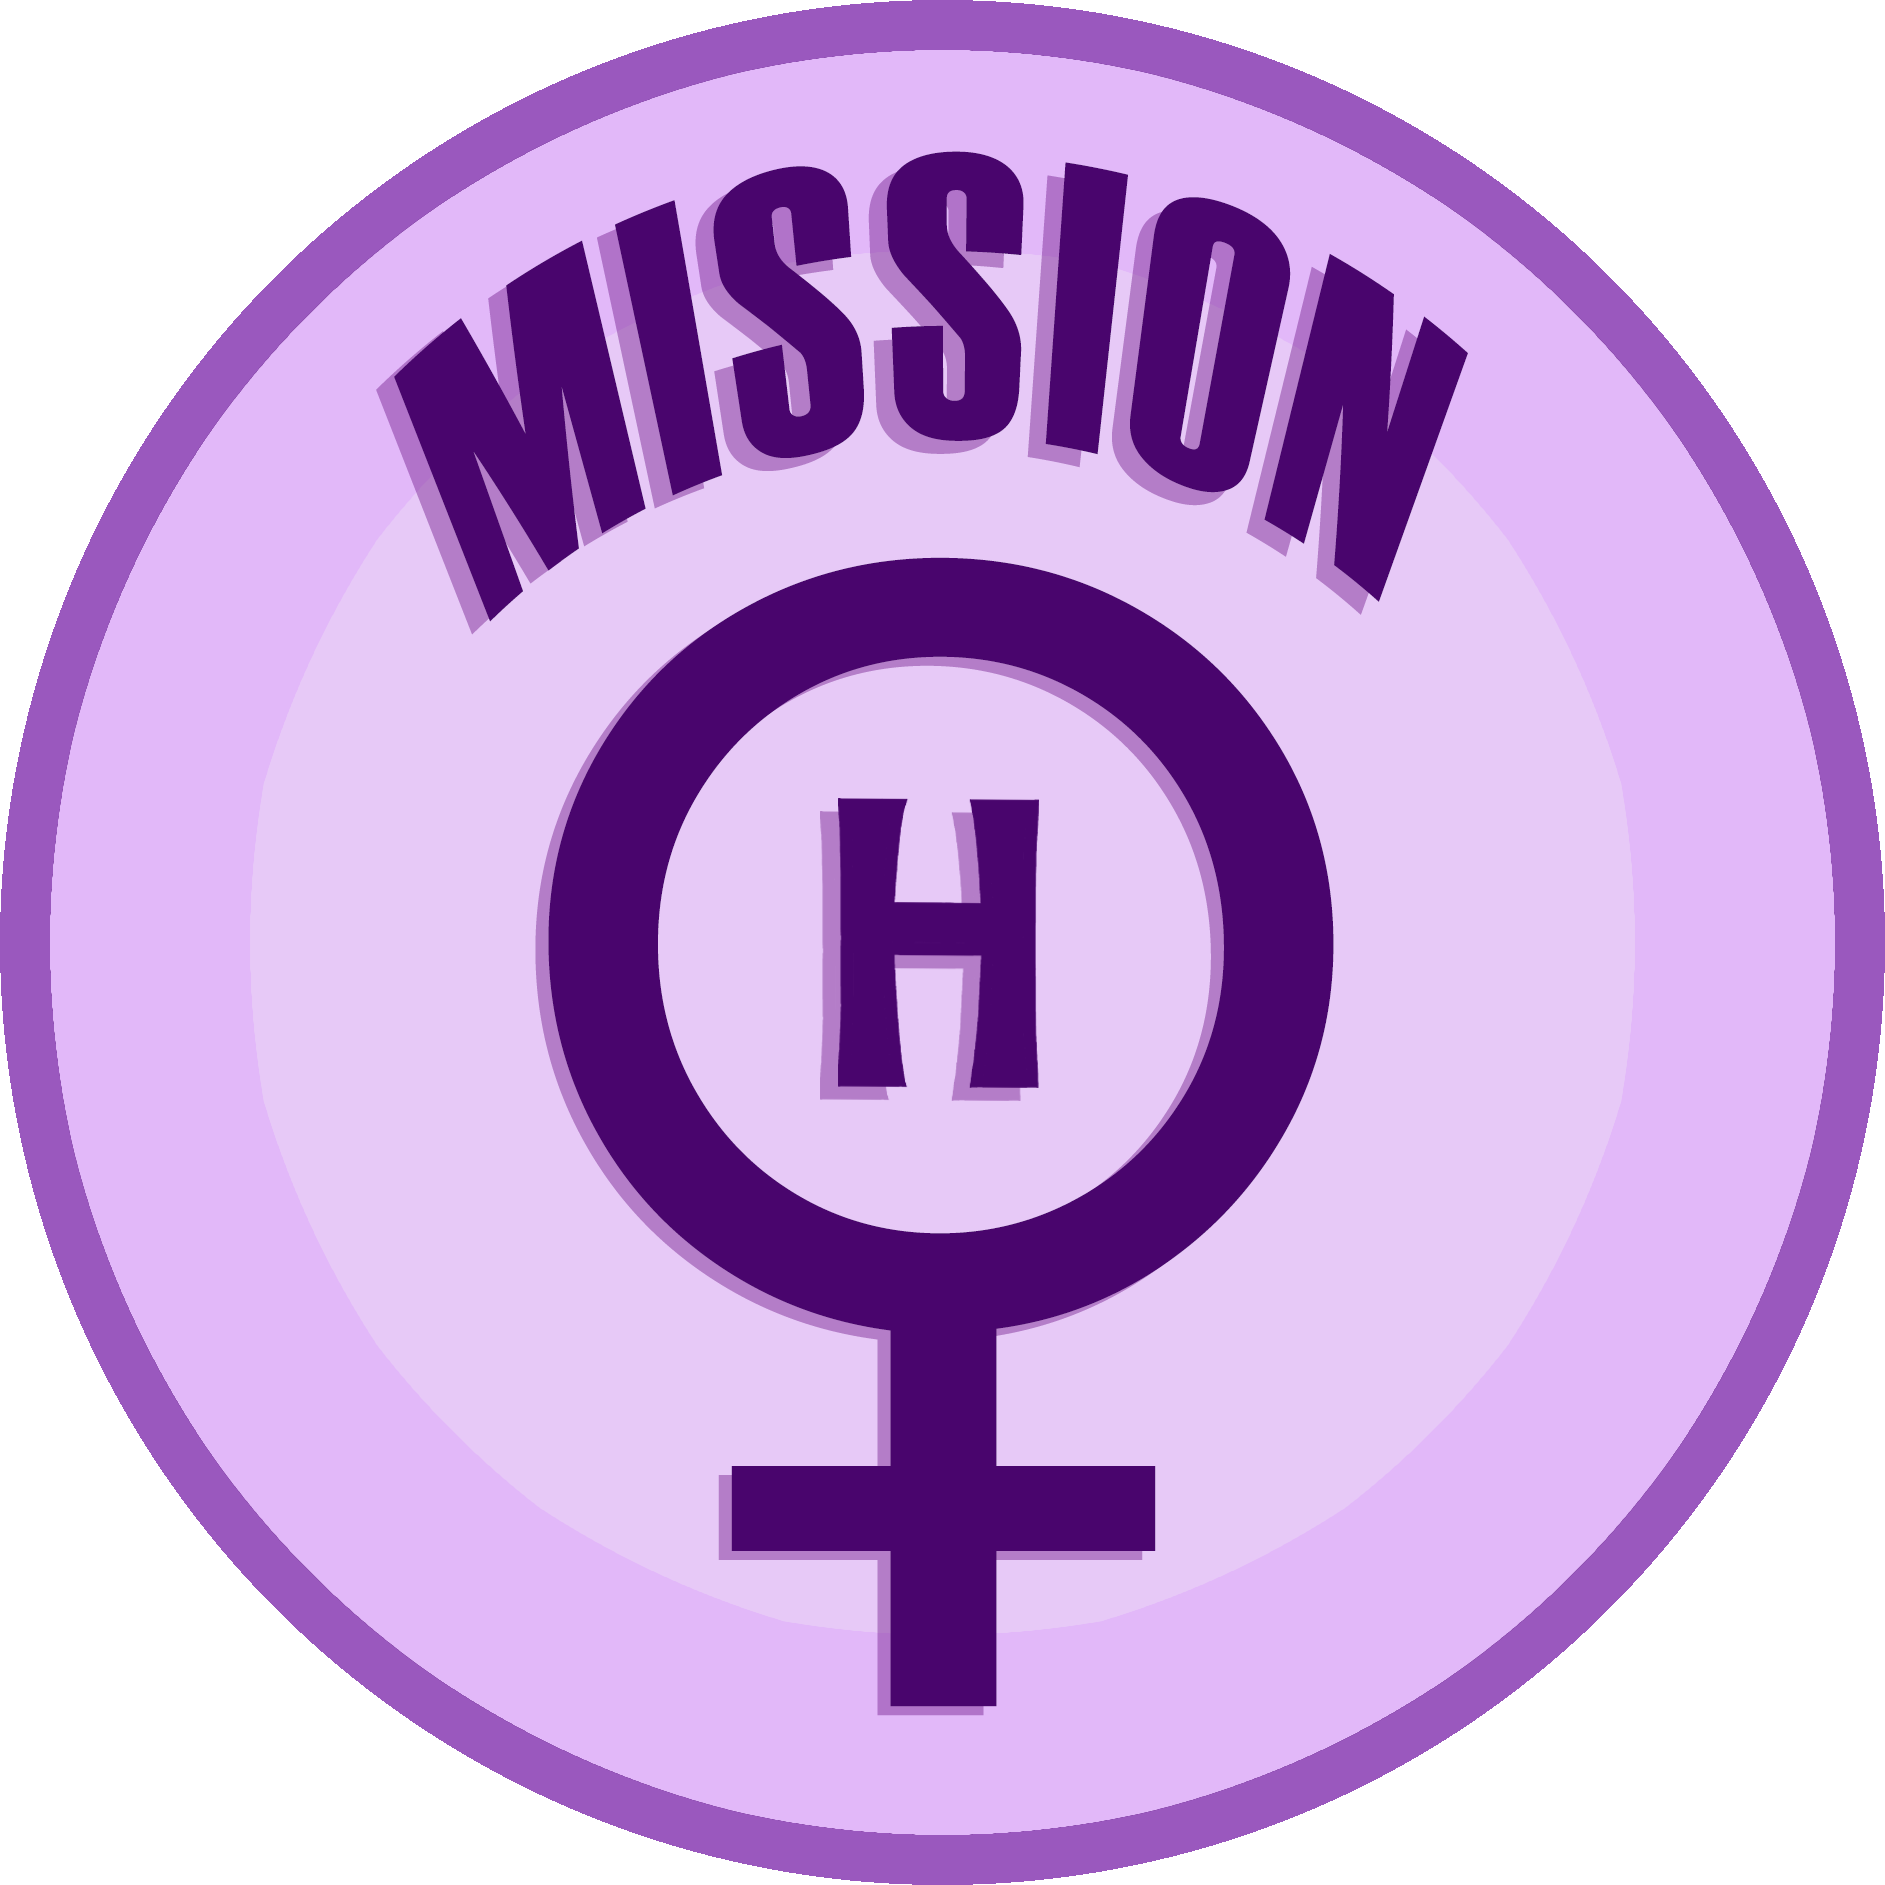 Mission h2